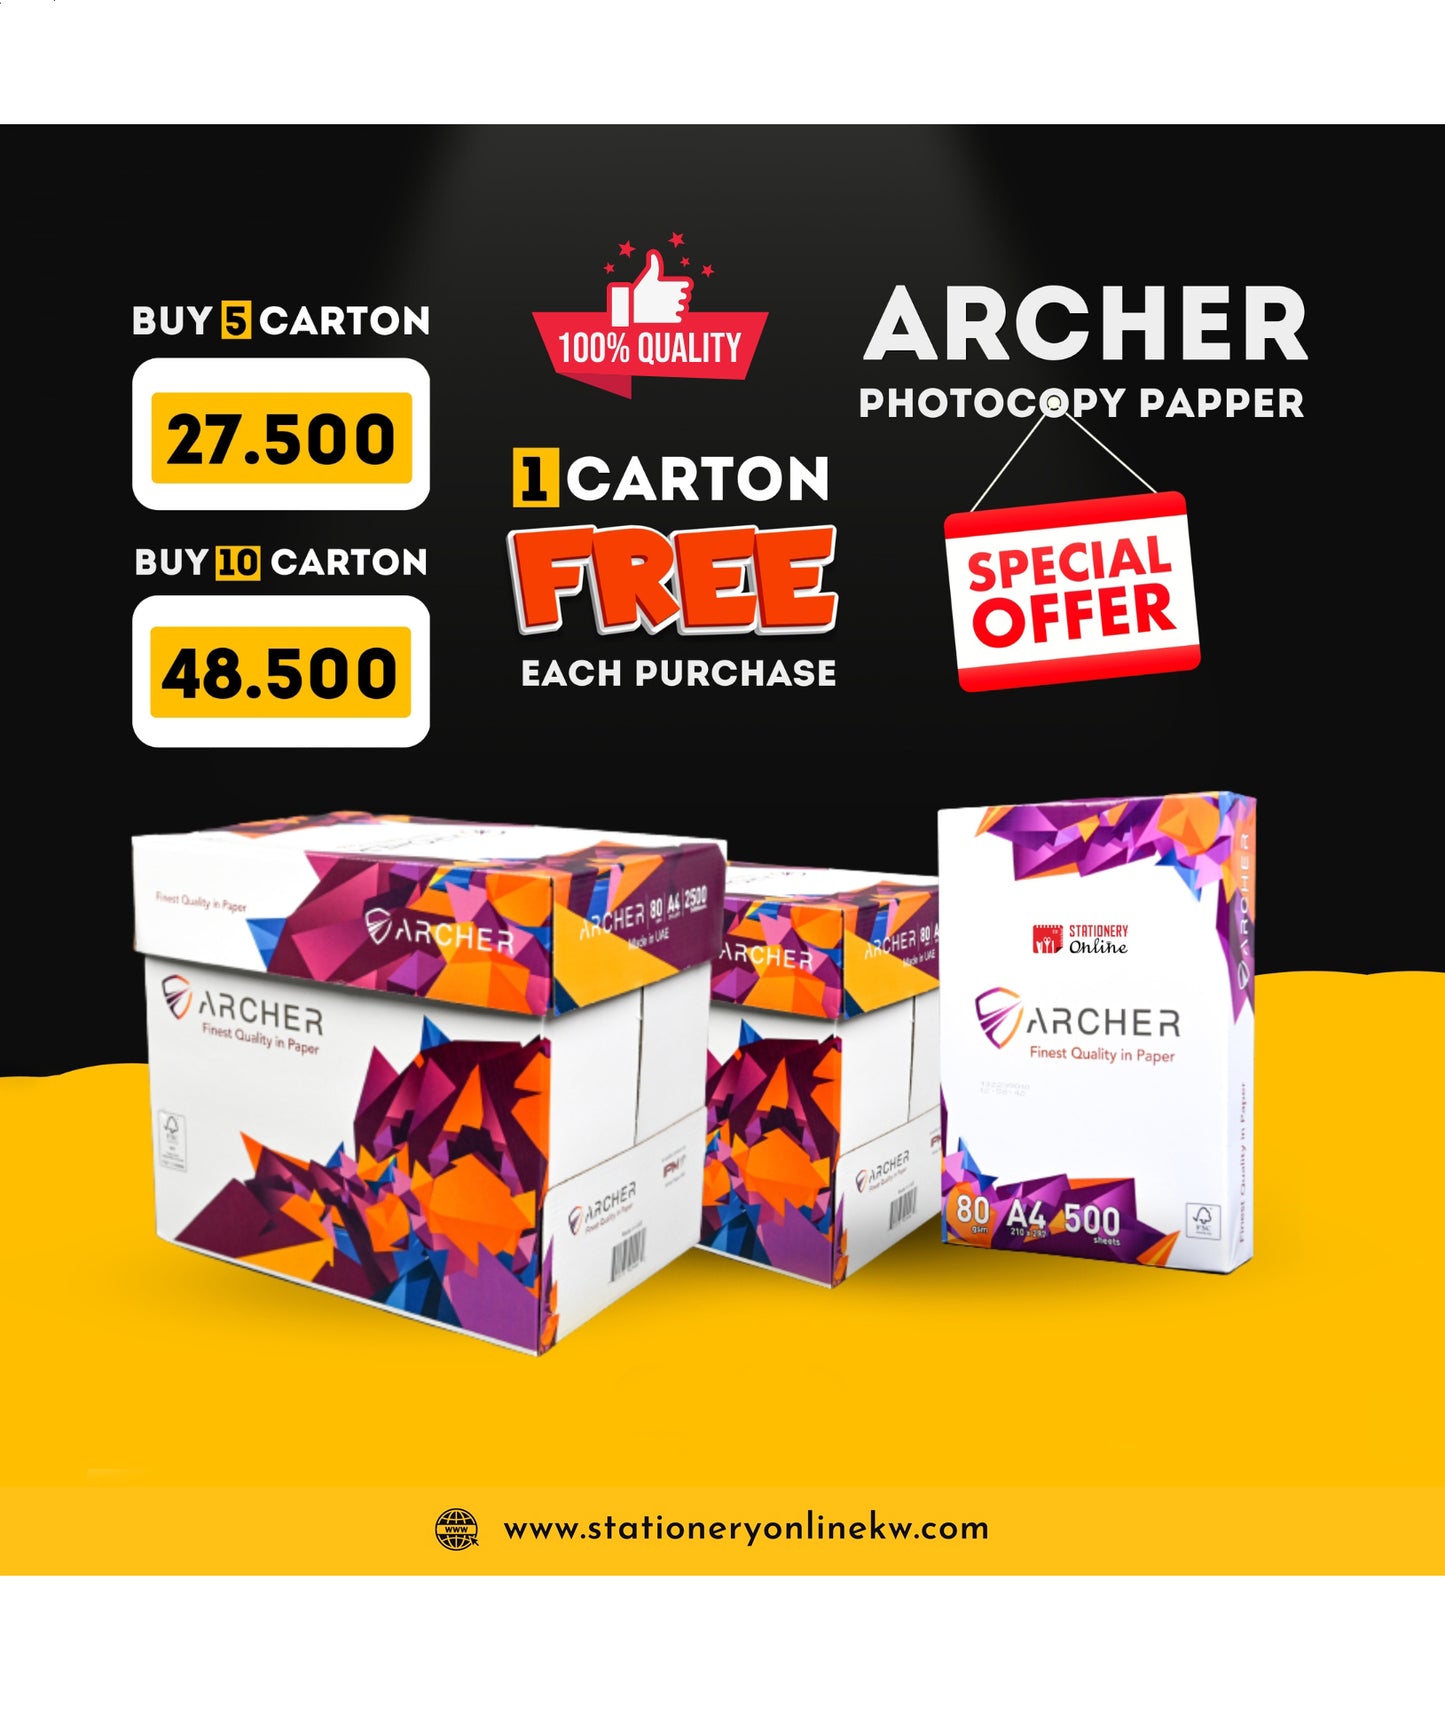 Archer Photocopy Paper - A4 - 80gsm - 500 sheets -        Buy 5 cartons Get 1 carton Free, Buy 10 cartons Get 1 carton Free